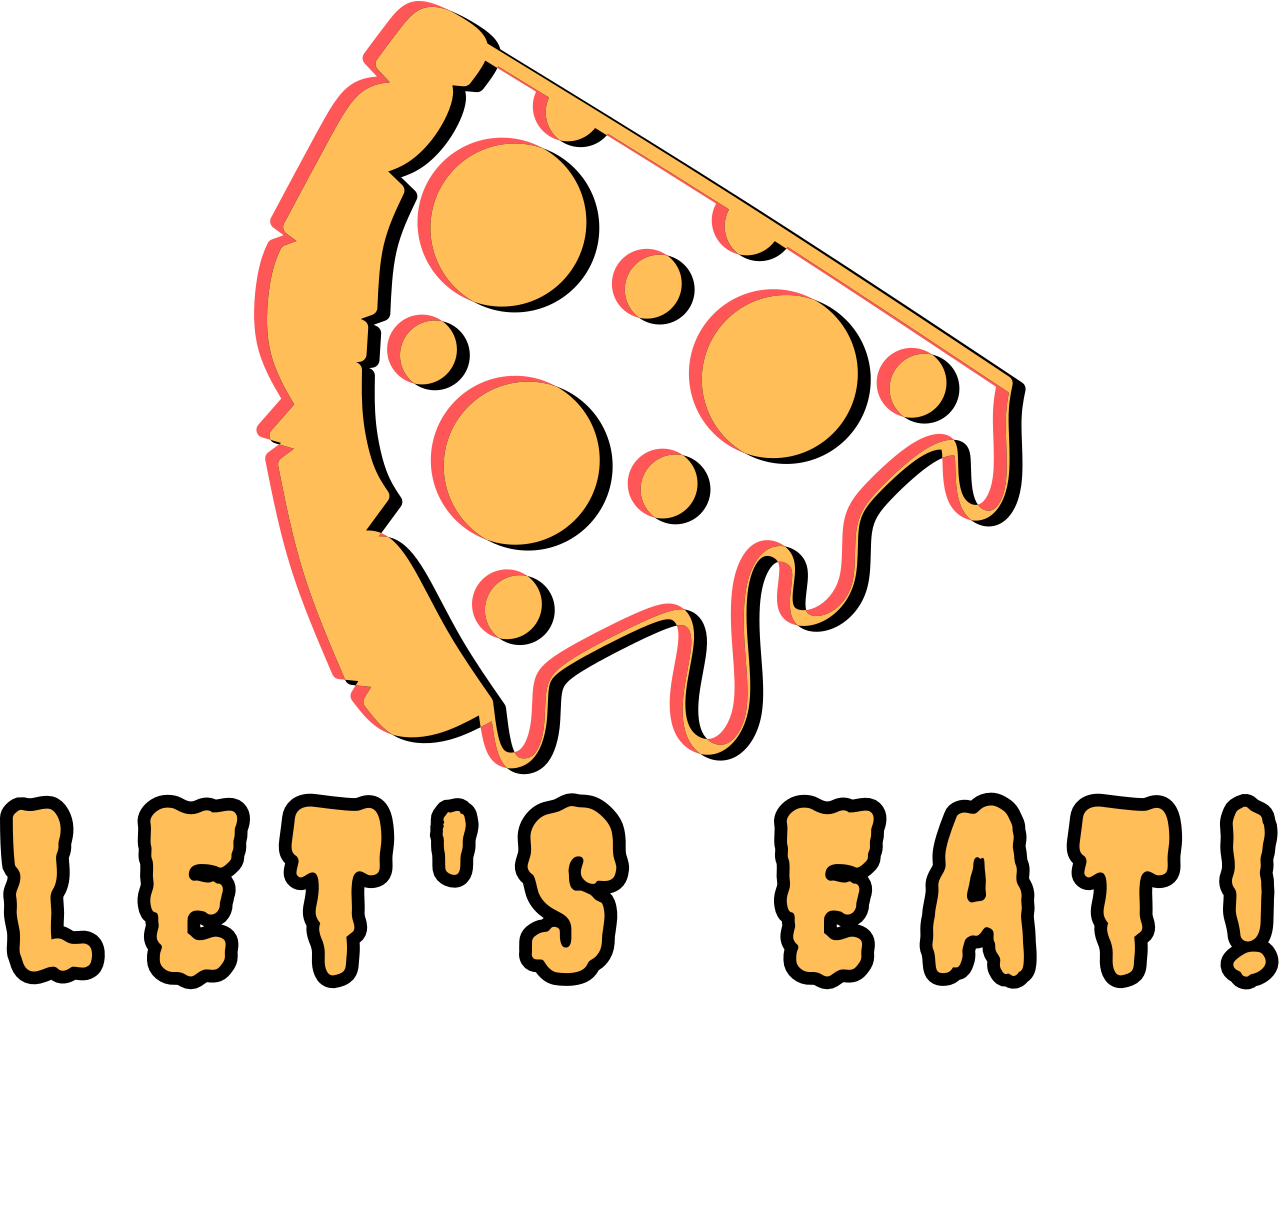 LET'S EAT!'s web page